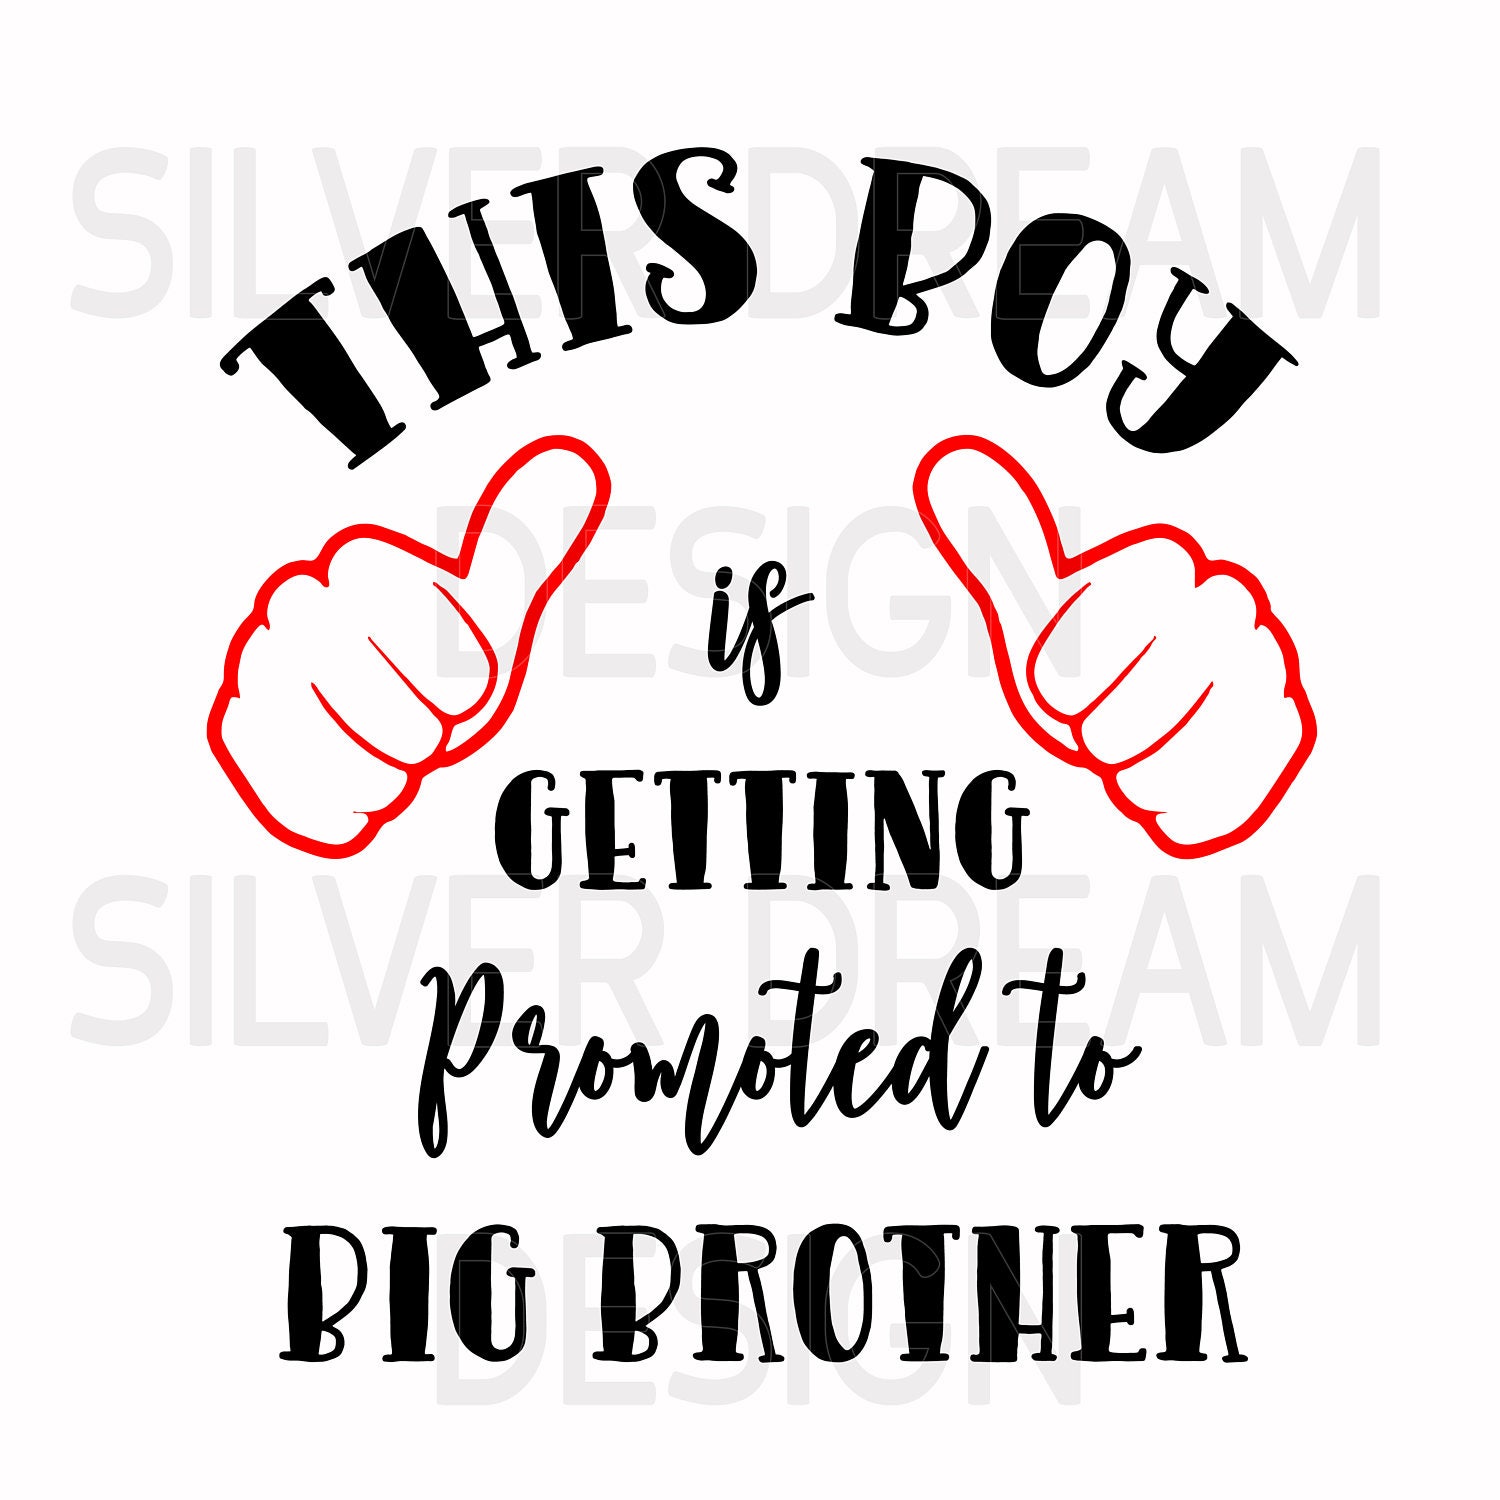 Download promoted to big brother svg file, big brother svg, brother ...